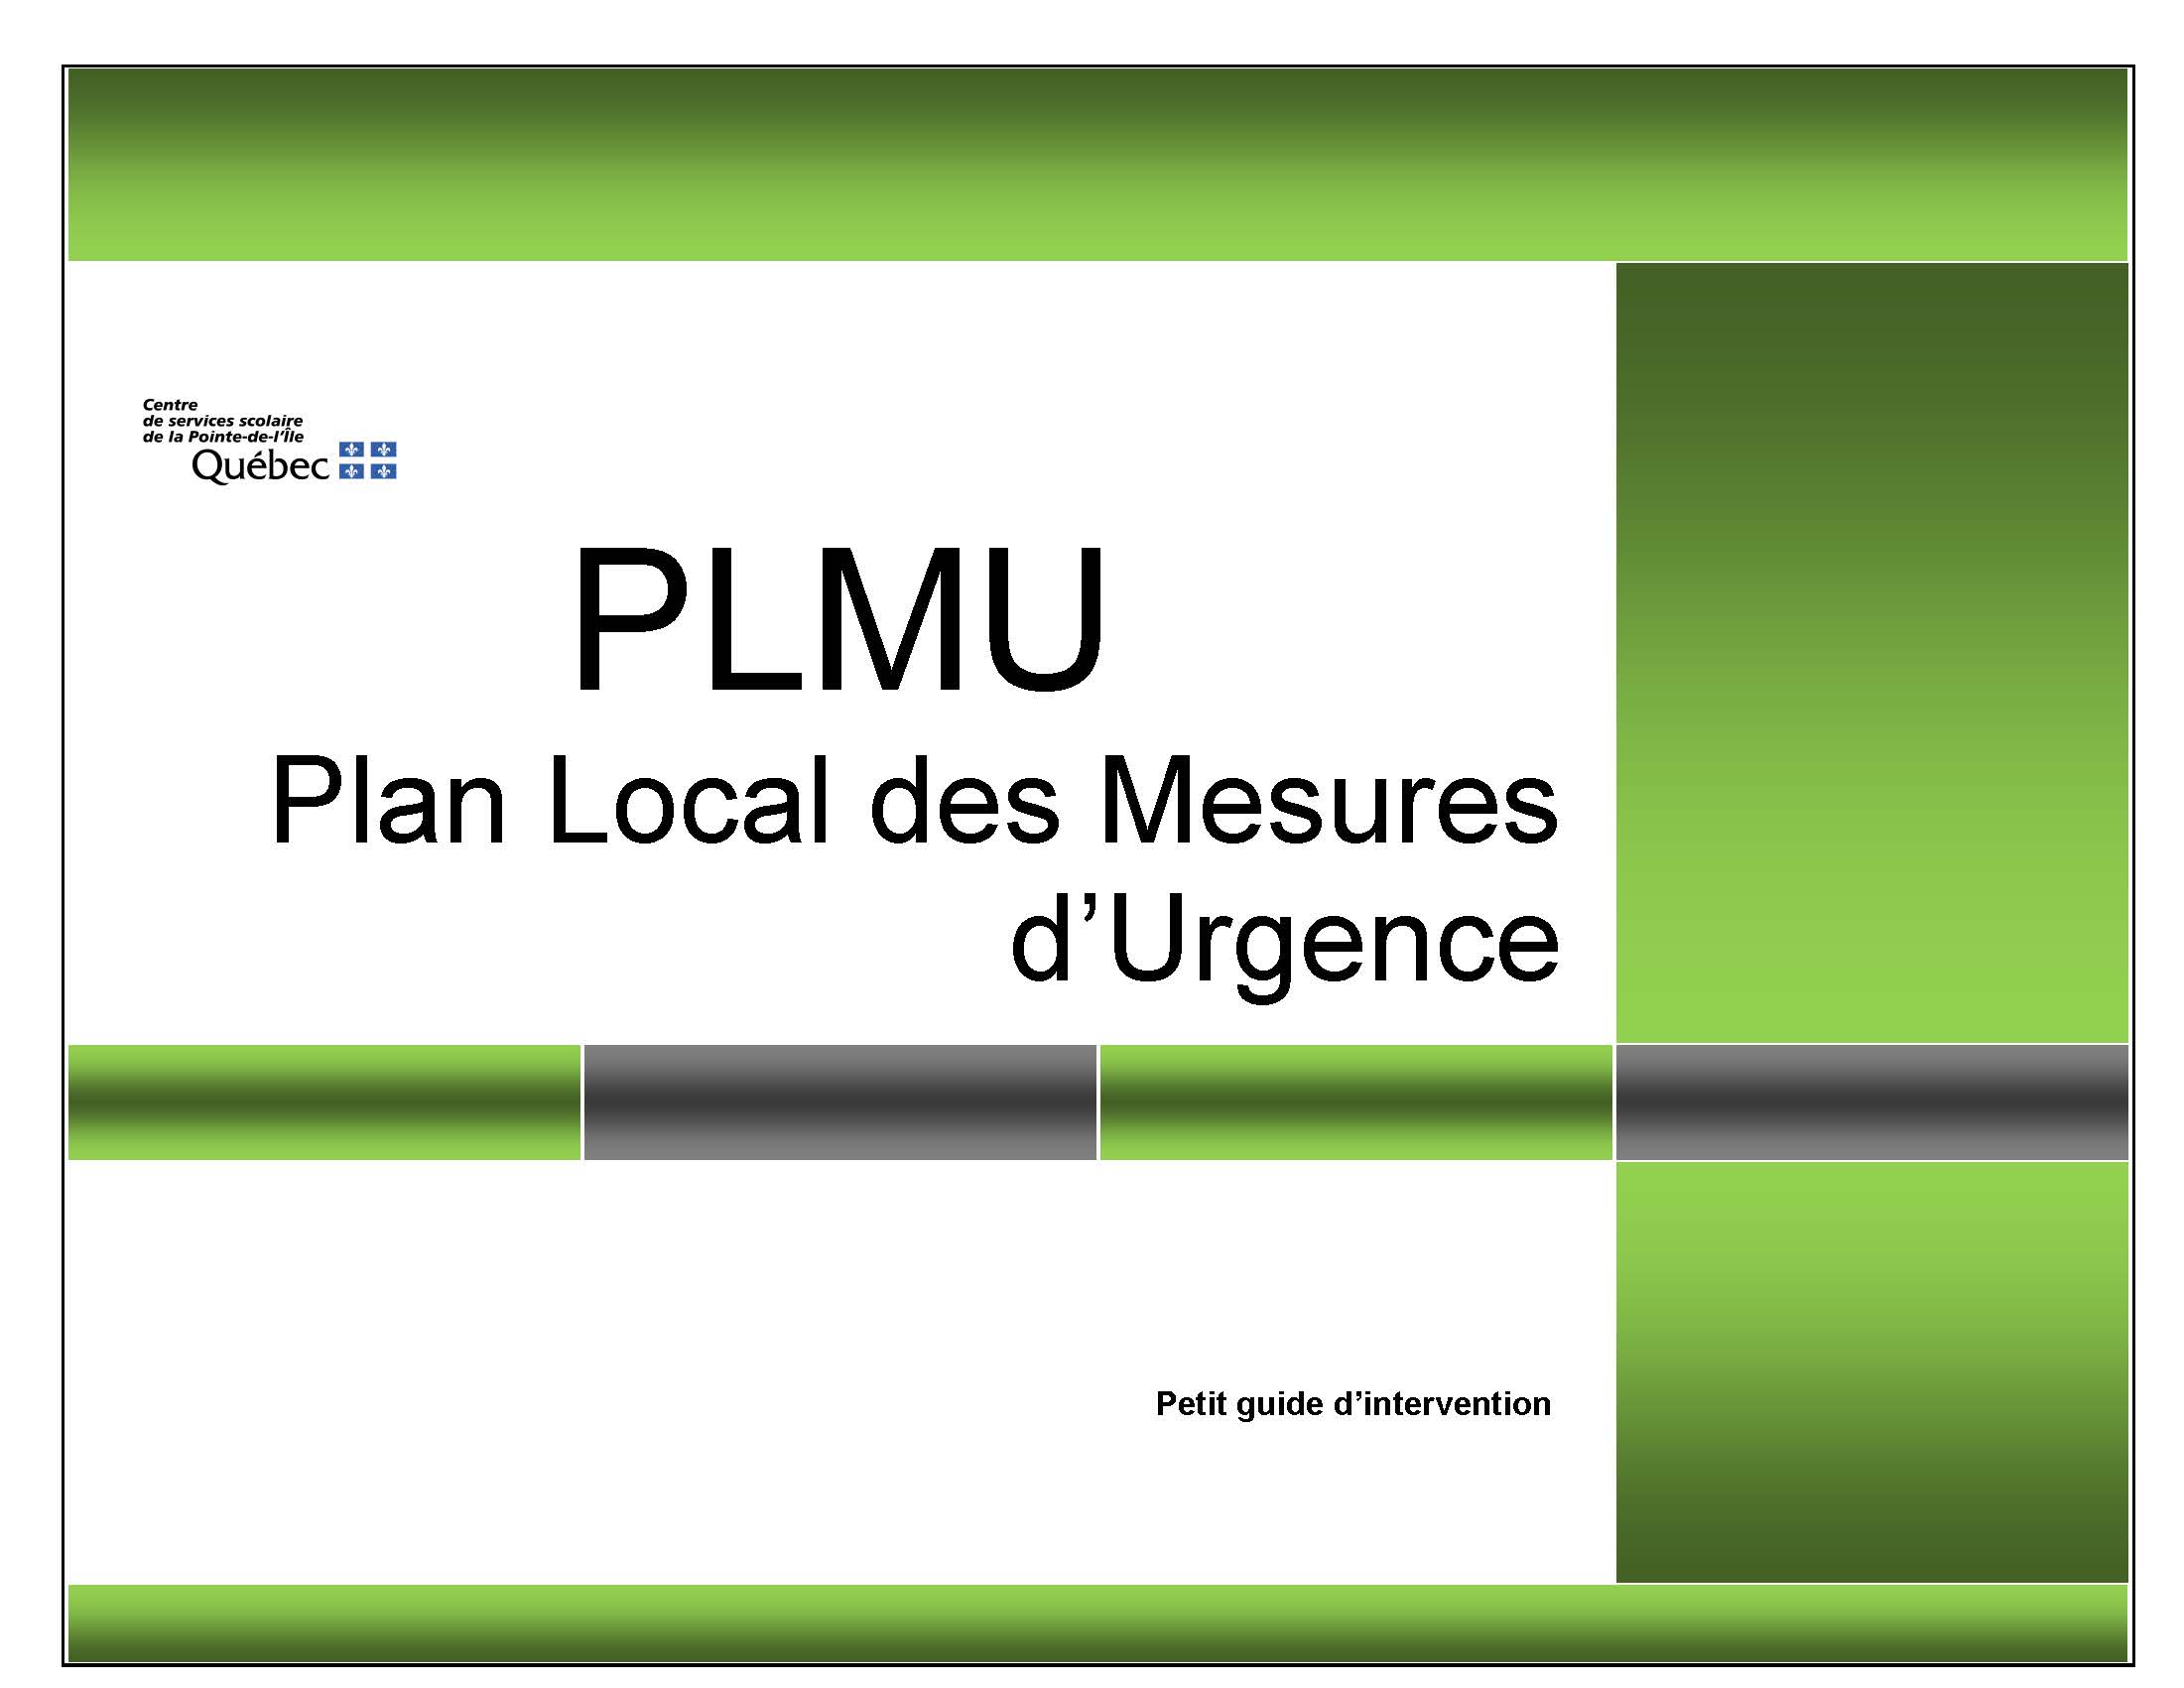 Plan Local des Mesures d’Urgences (PLMU)